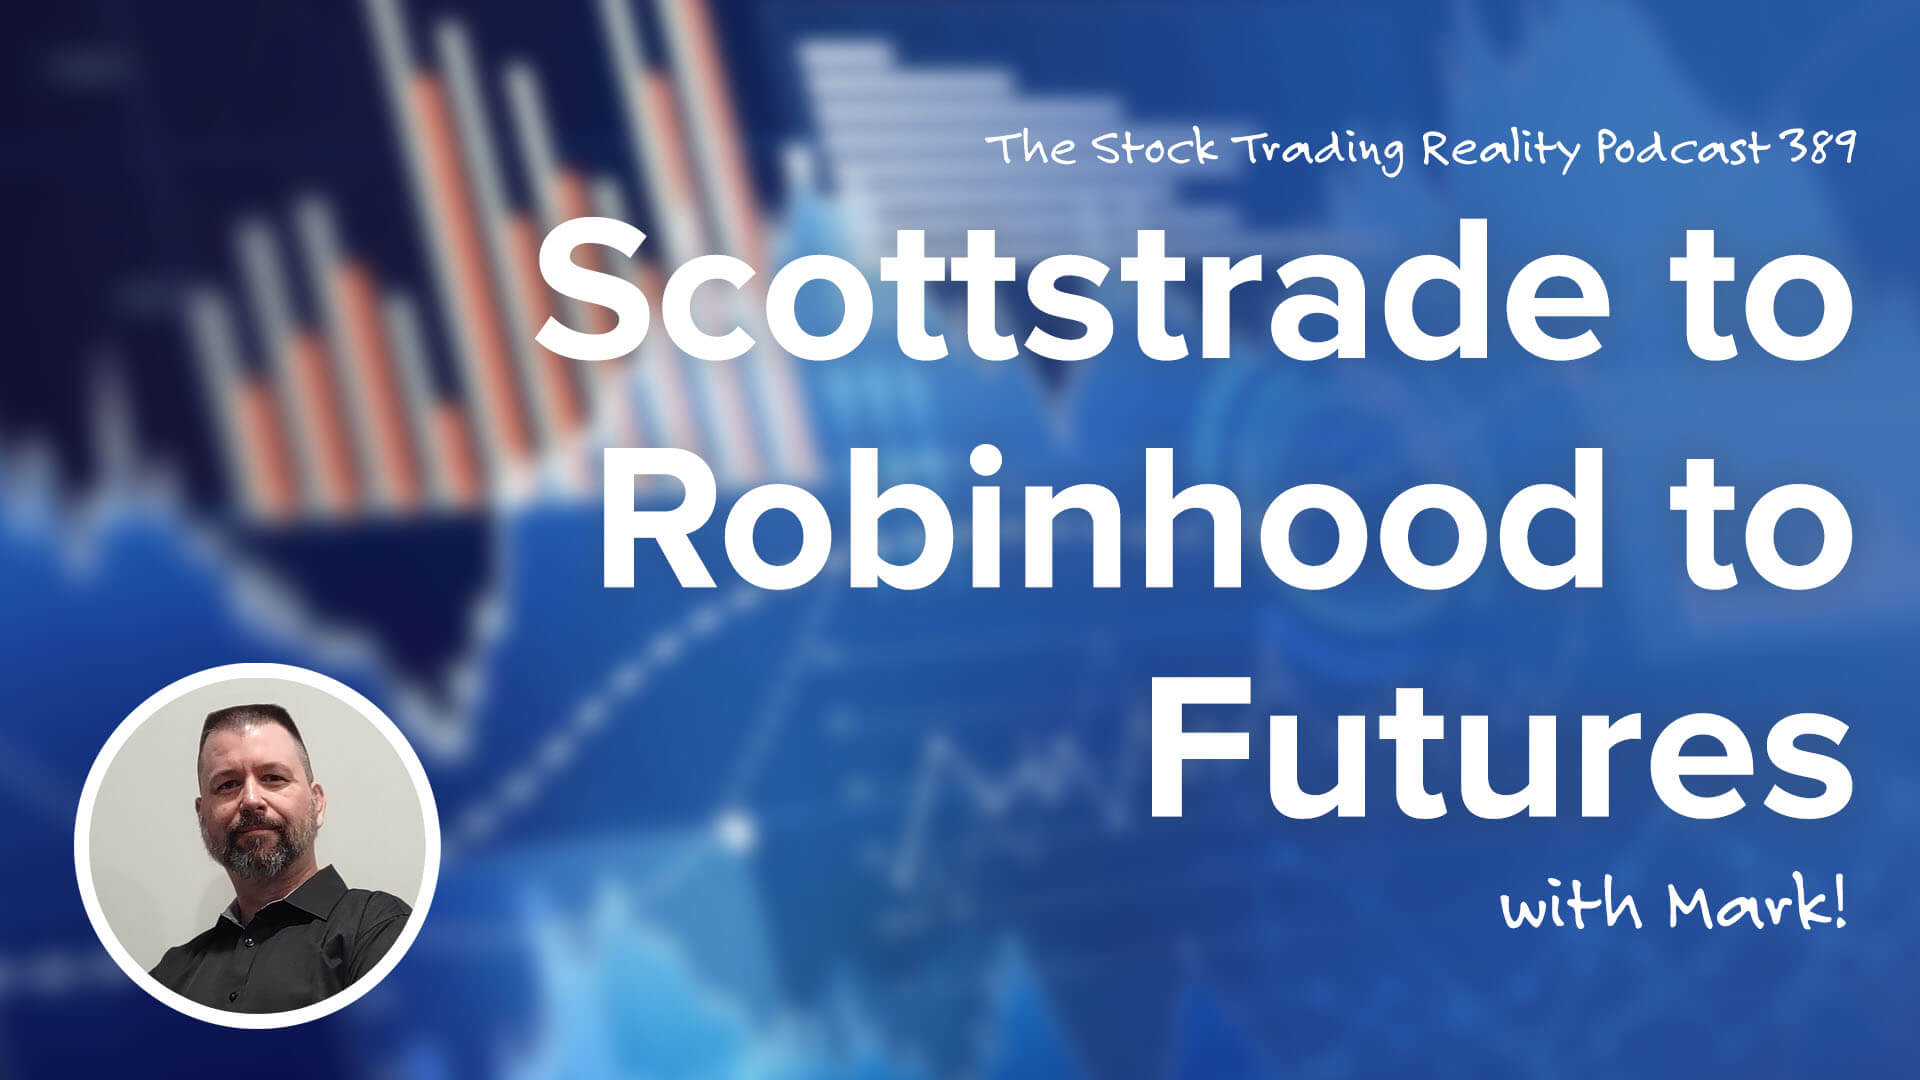 From Scottstrade to Robinhood to Futures